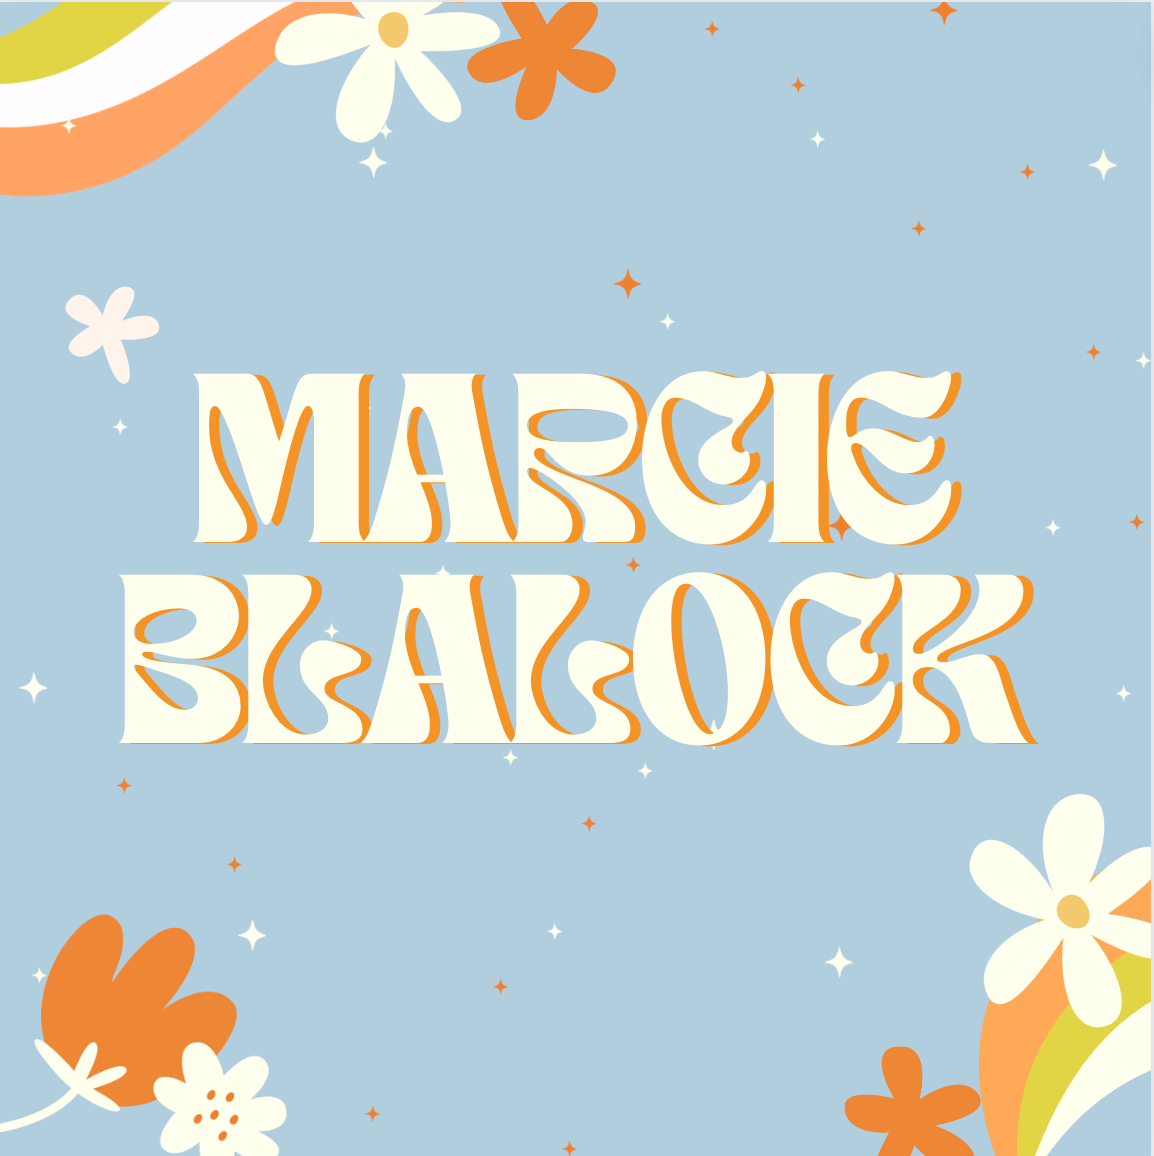 Marcie Blalock